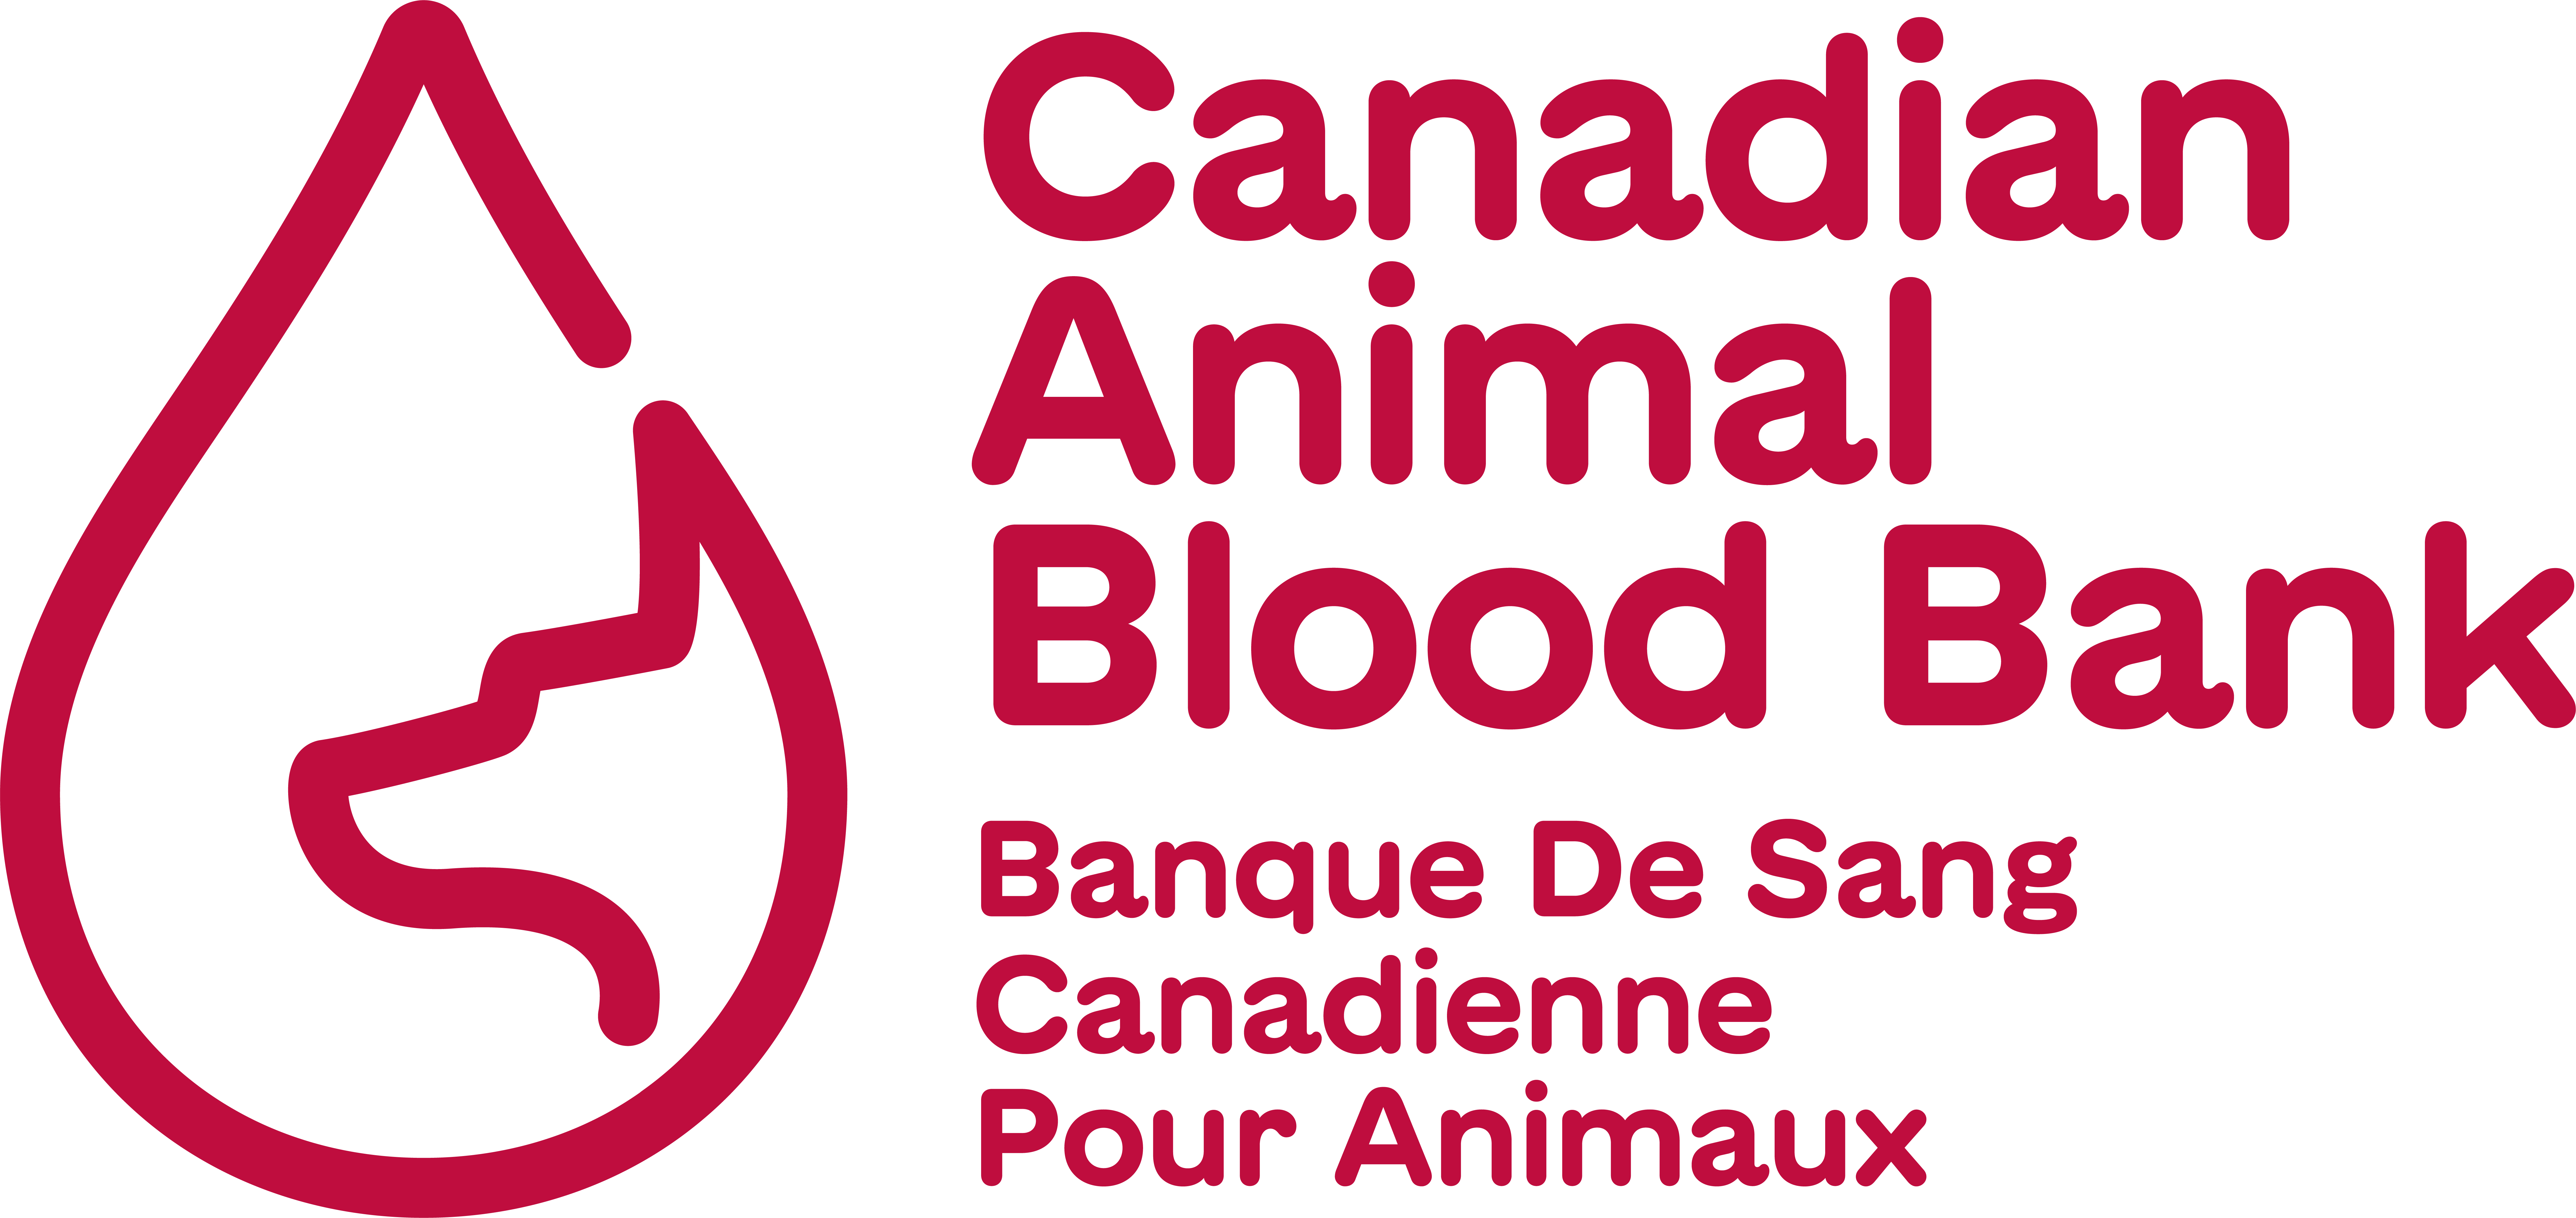 Canadian Animal Blood Bank Inc.